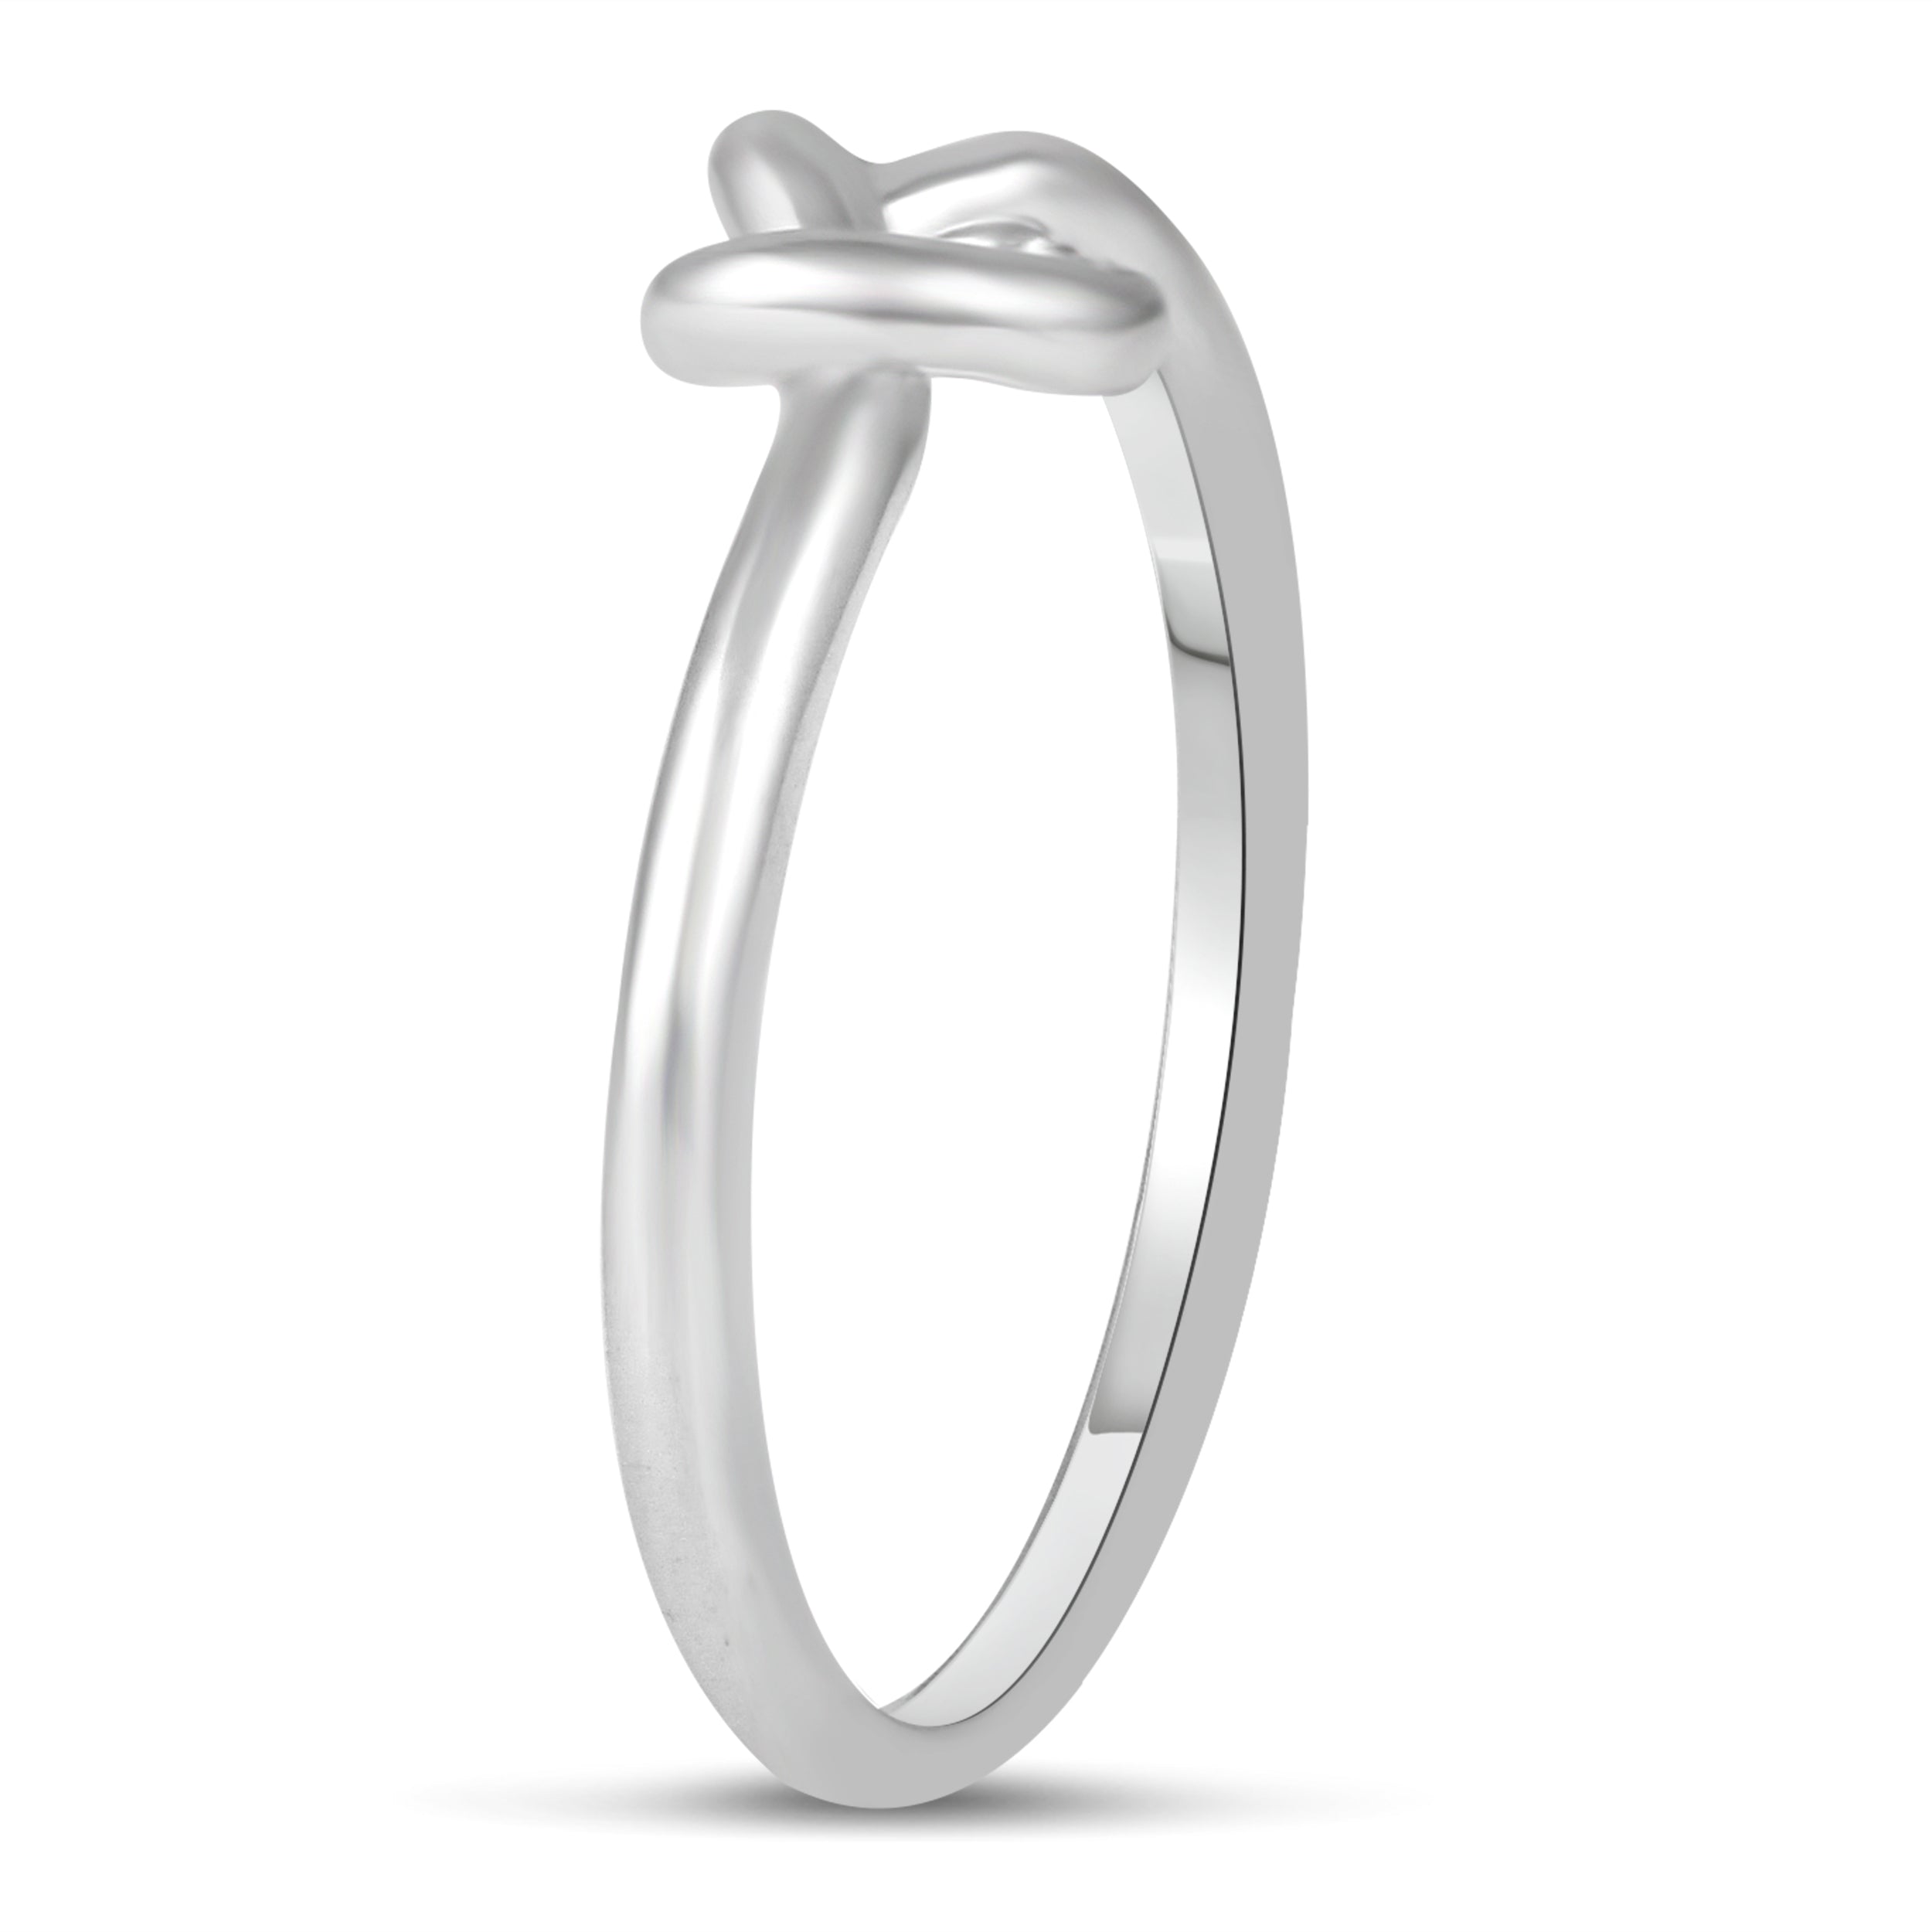 Sterling Silver Plain 3 mm Band Ring | FashionJunkie4Life.com